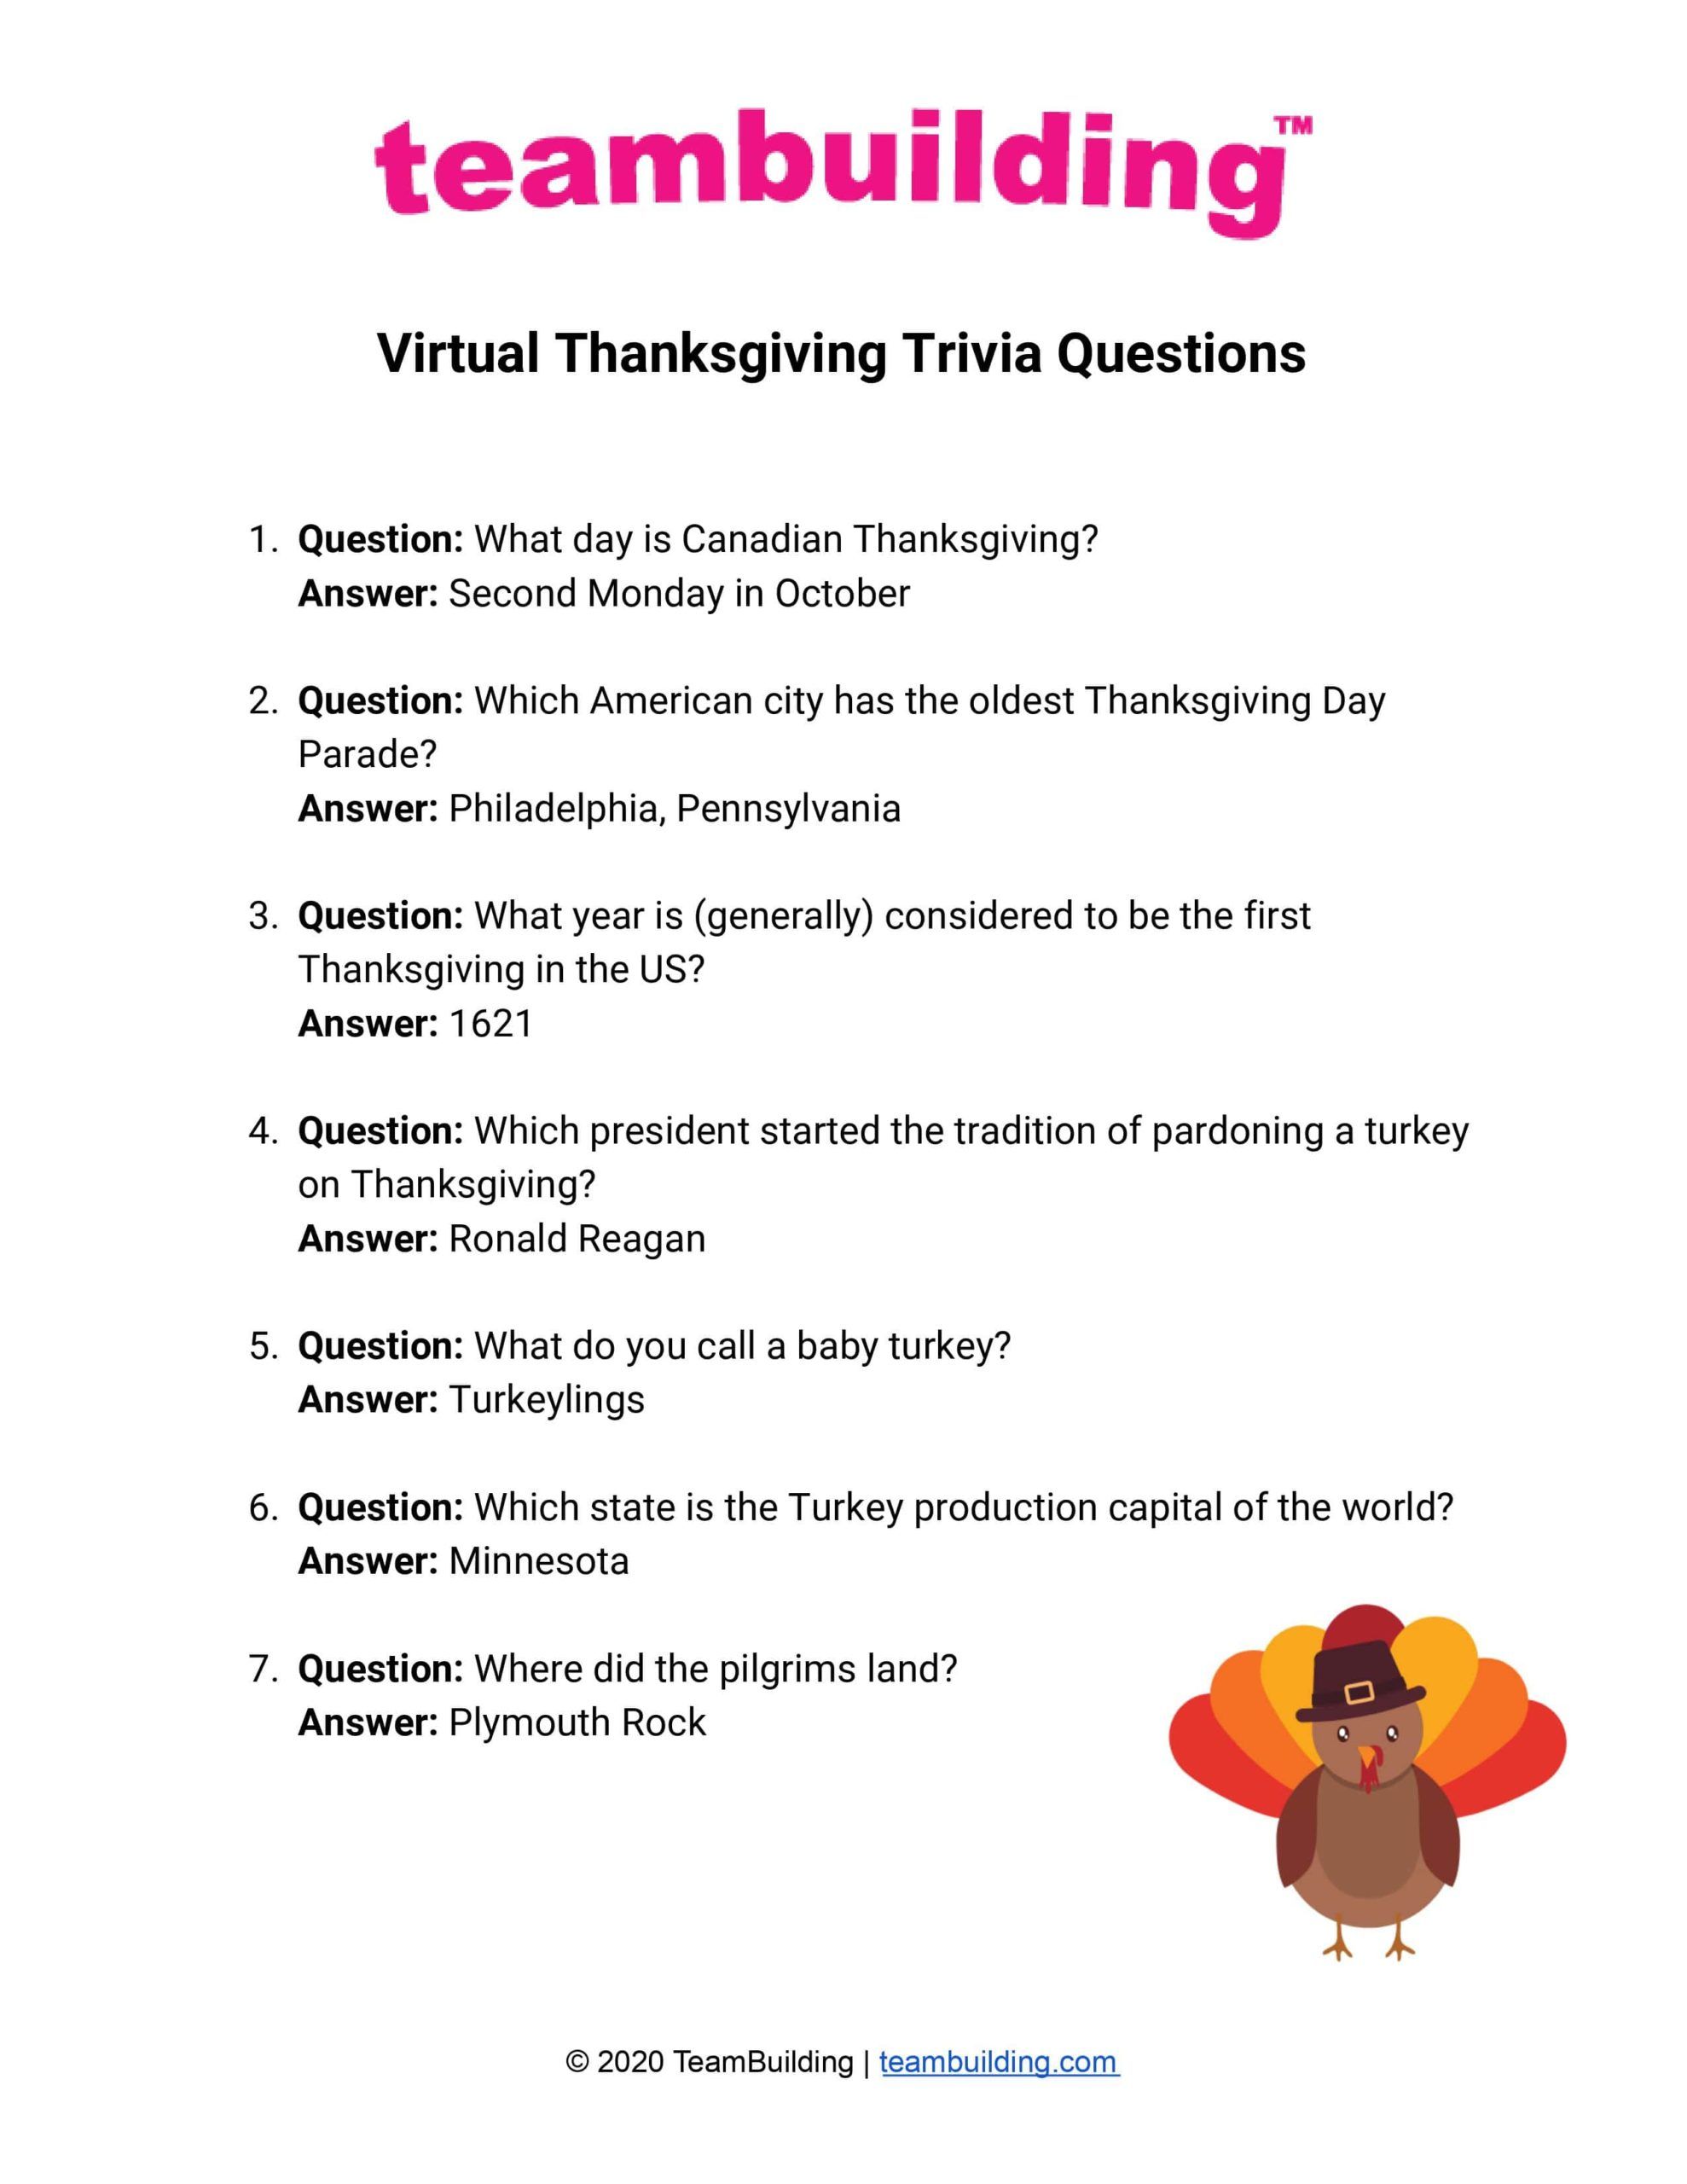 Virtual Thanksgiving trivia questions